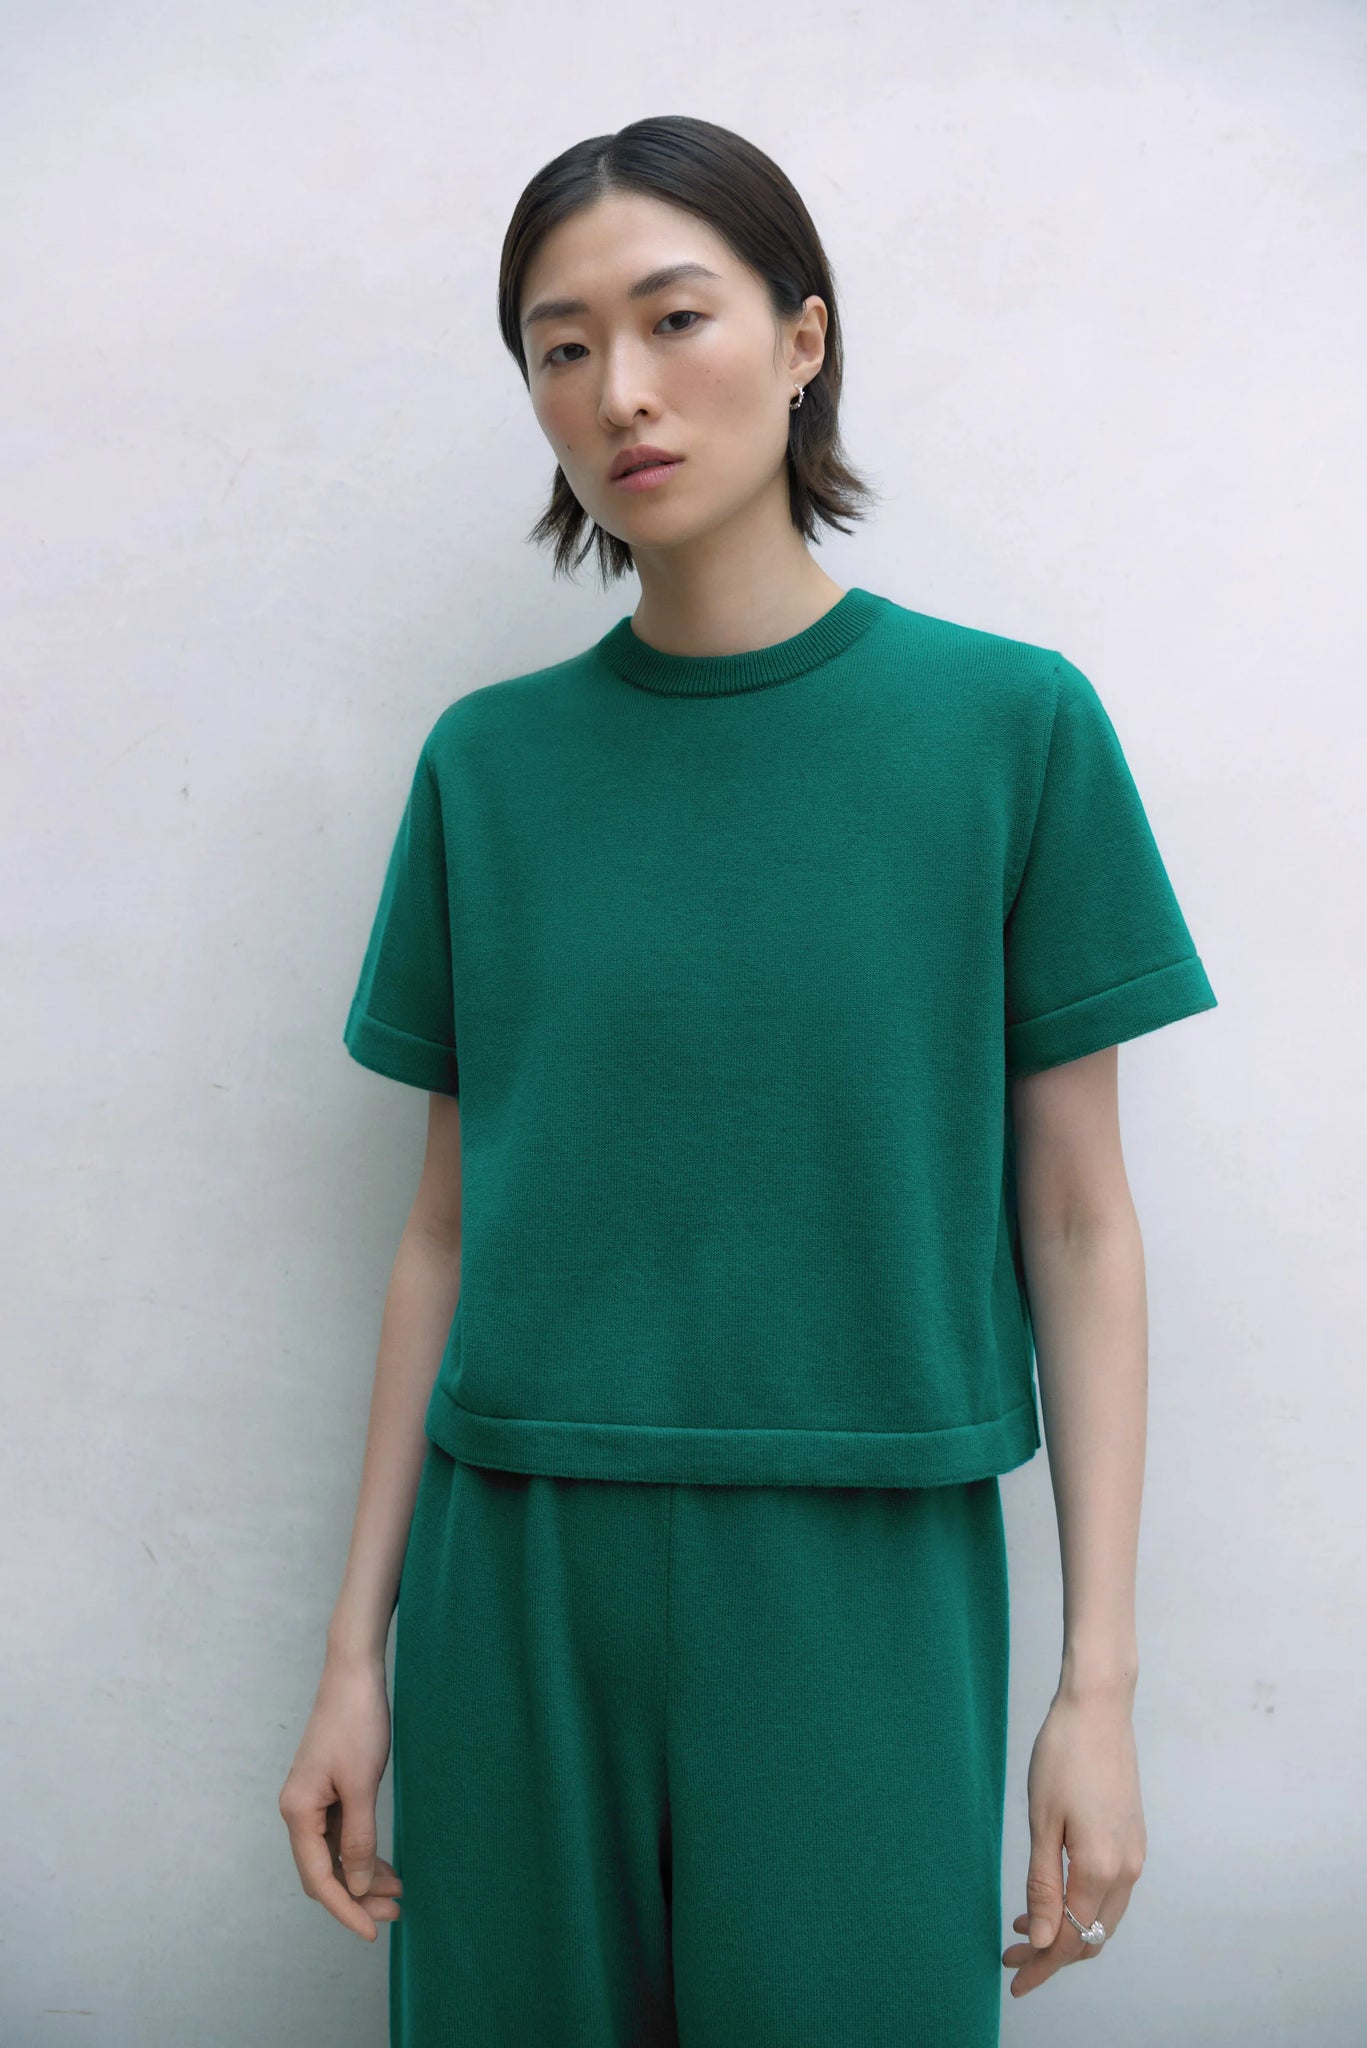 Cordera merino wool t-shirt teal green front